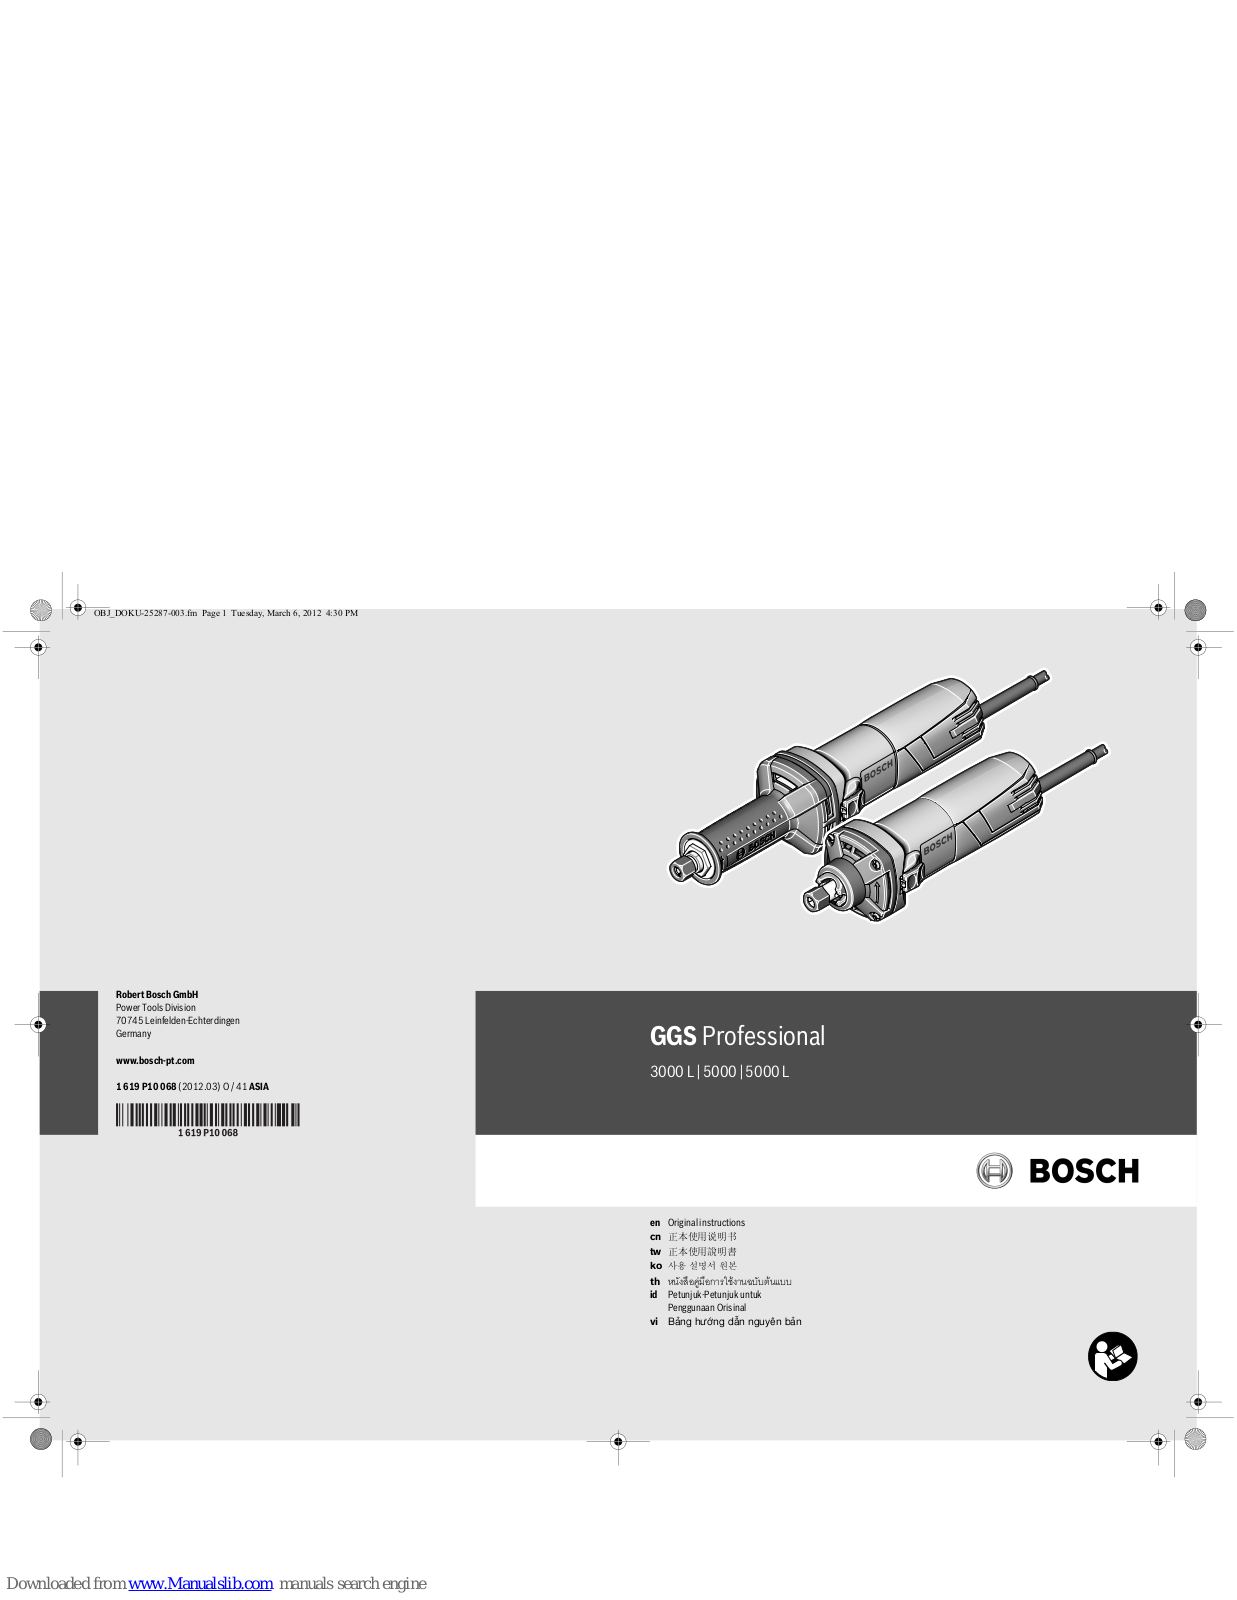 Bosch GGS 3000 L Professional, GGS 5000 Professional, GGS 5000 L Professional Original Instructions Manual